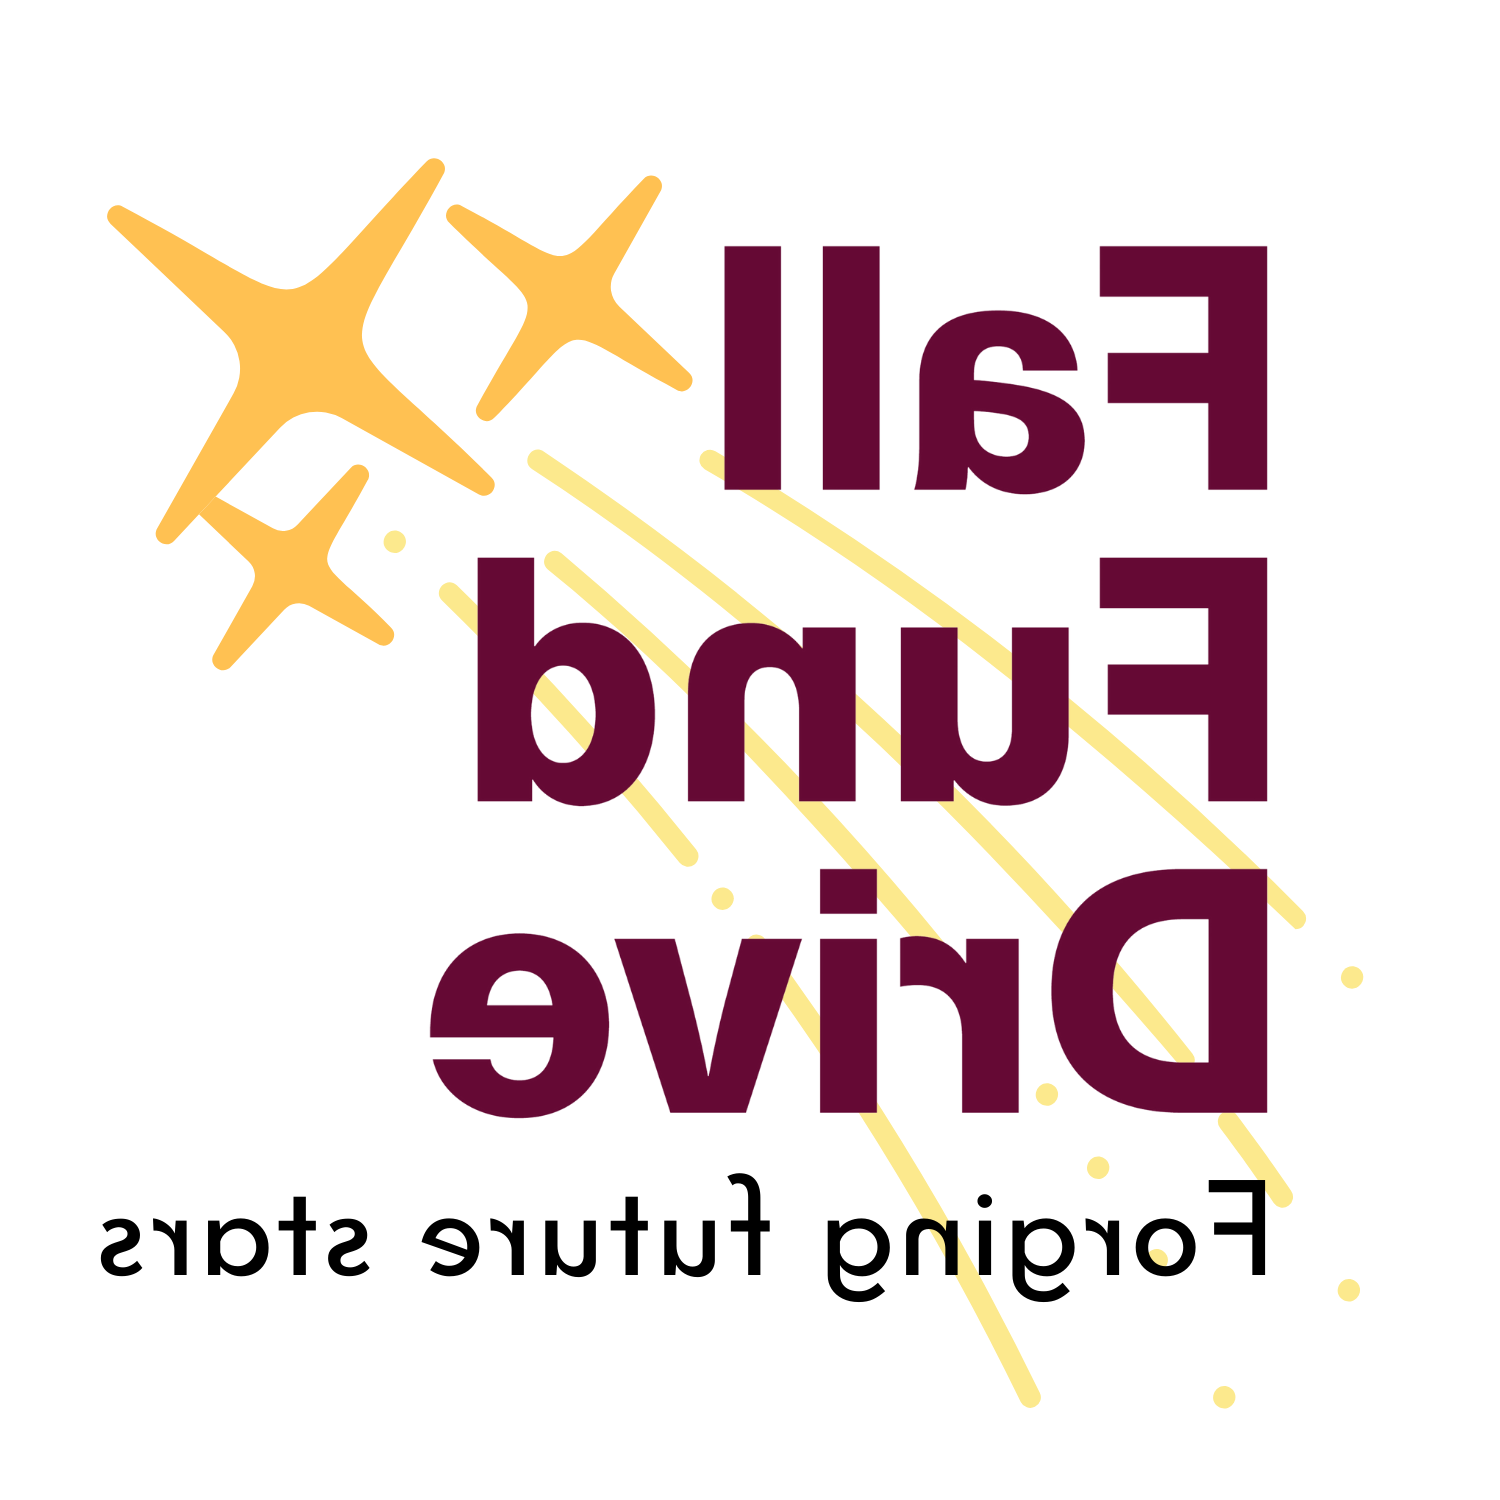 Full Fund Drive logo